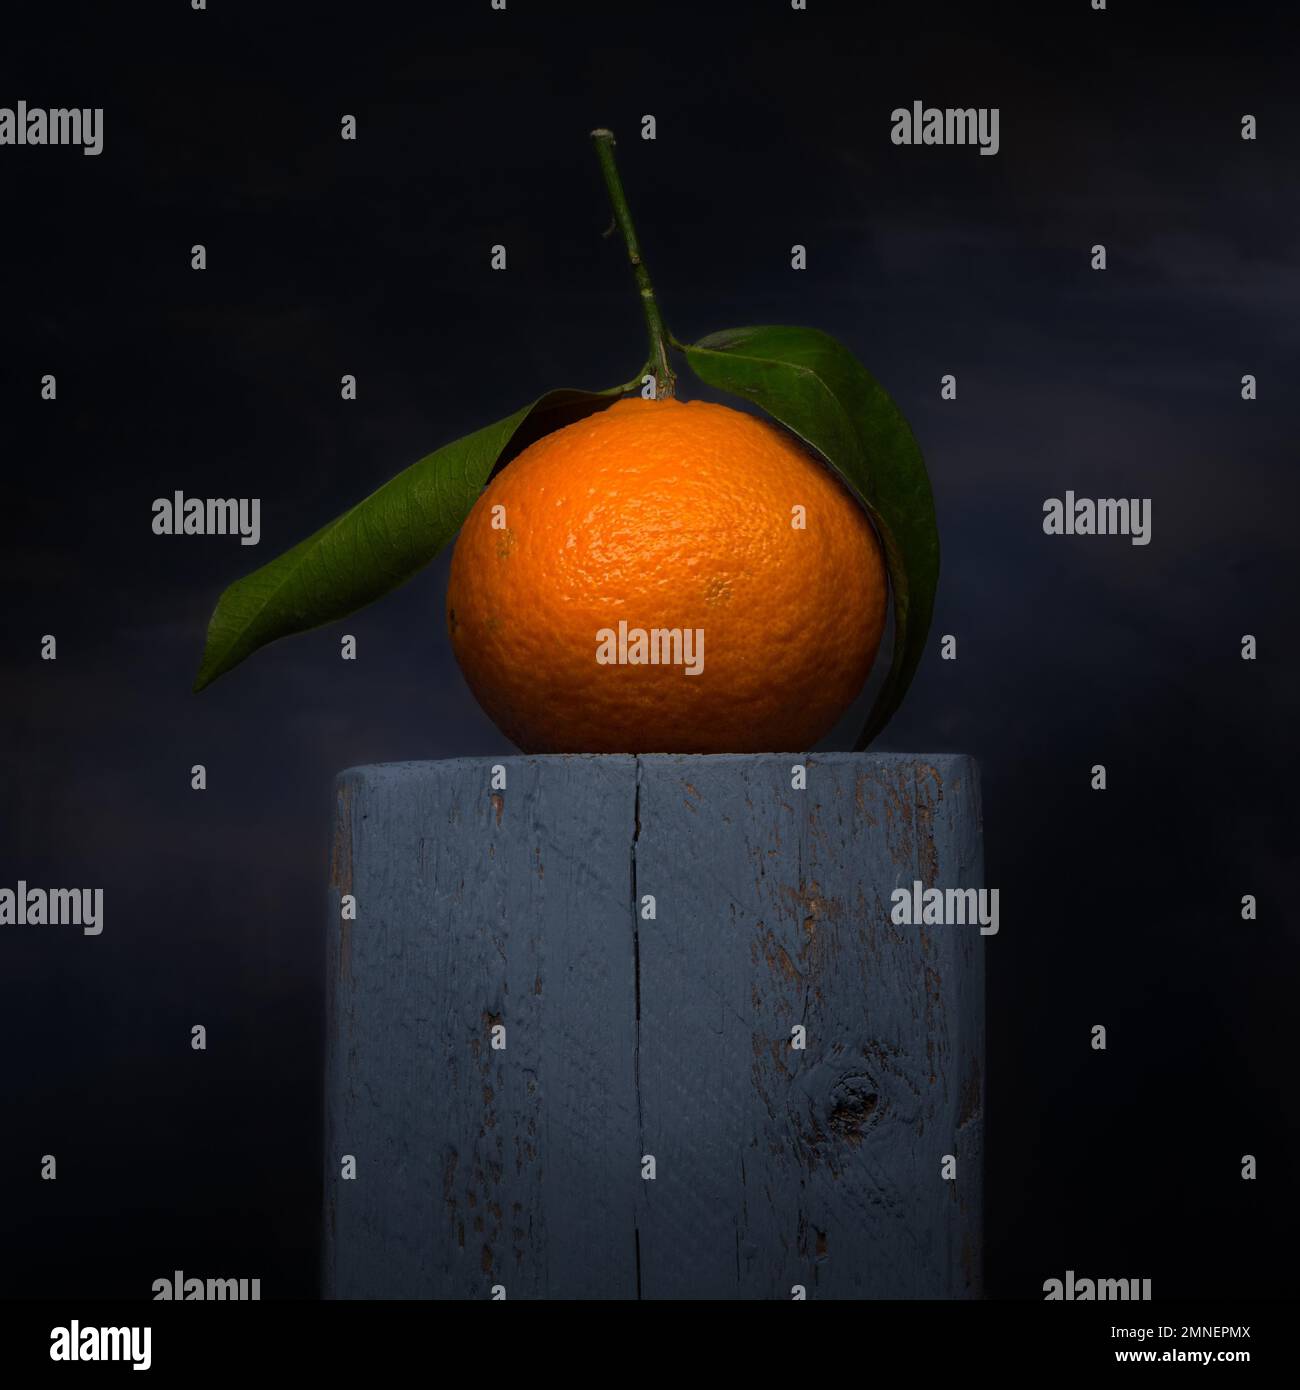 https://c8.alamy.com/comp/2MNEPMX/still-life-with-tangerine-on-wooden-block-studio-shot-dark-background-2MNEPMX.jpg